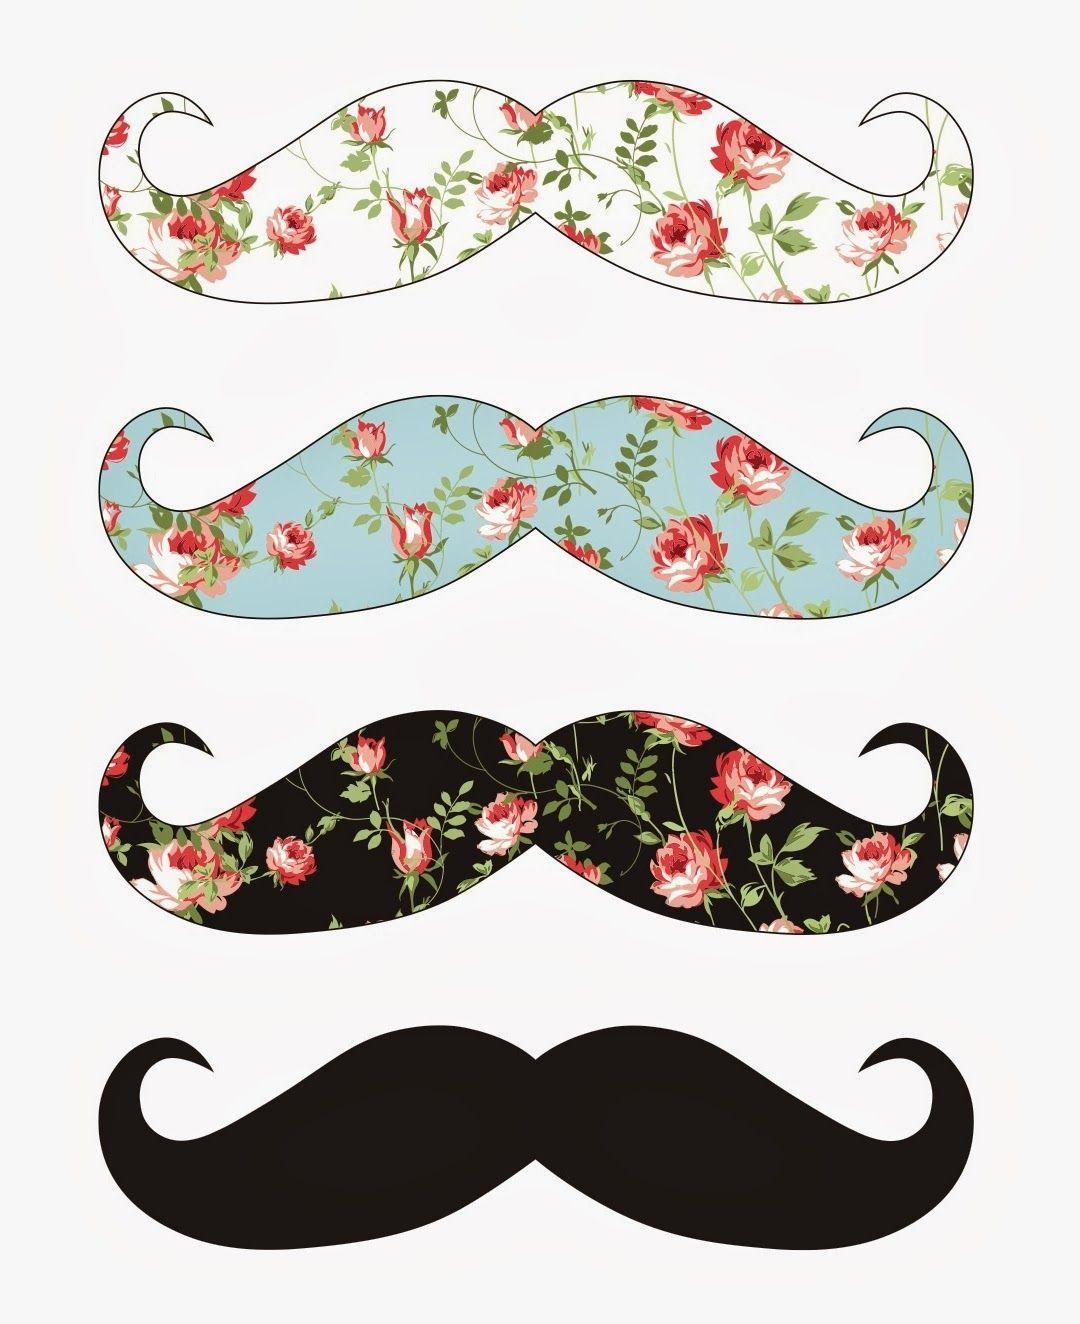 Iphone 6 wallpaper  Mustache